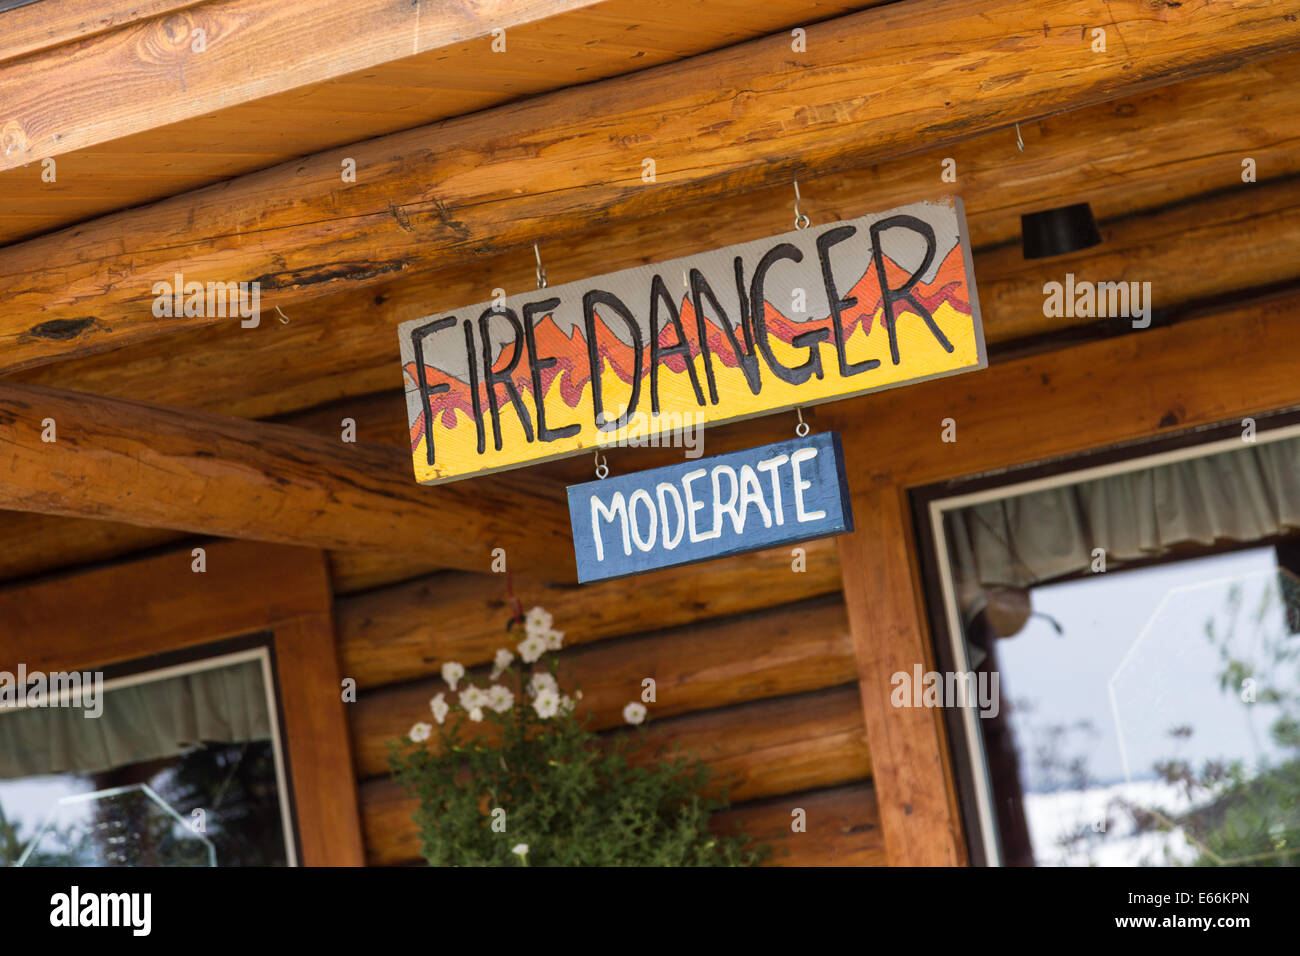 Moderate Fire Danger Status Sign, Montana, USA Stock Photo